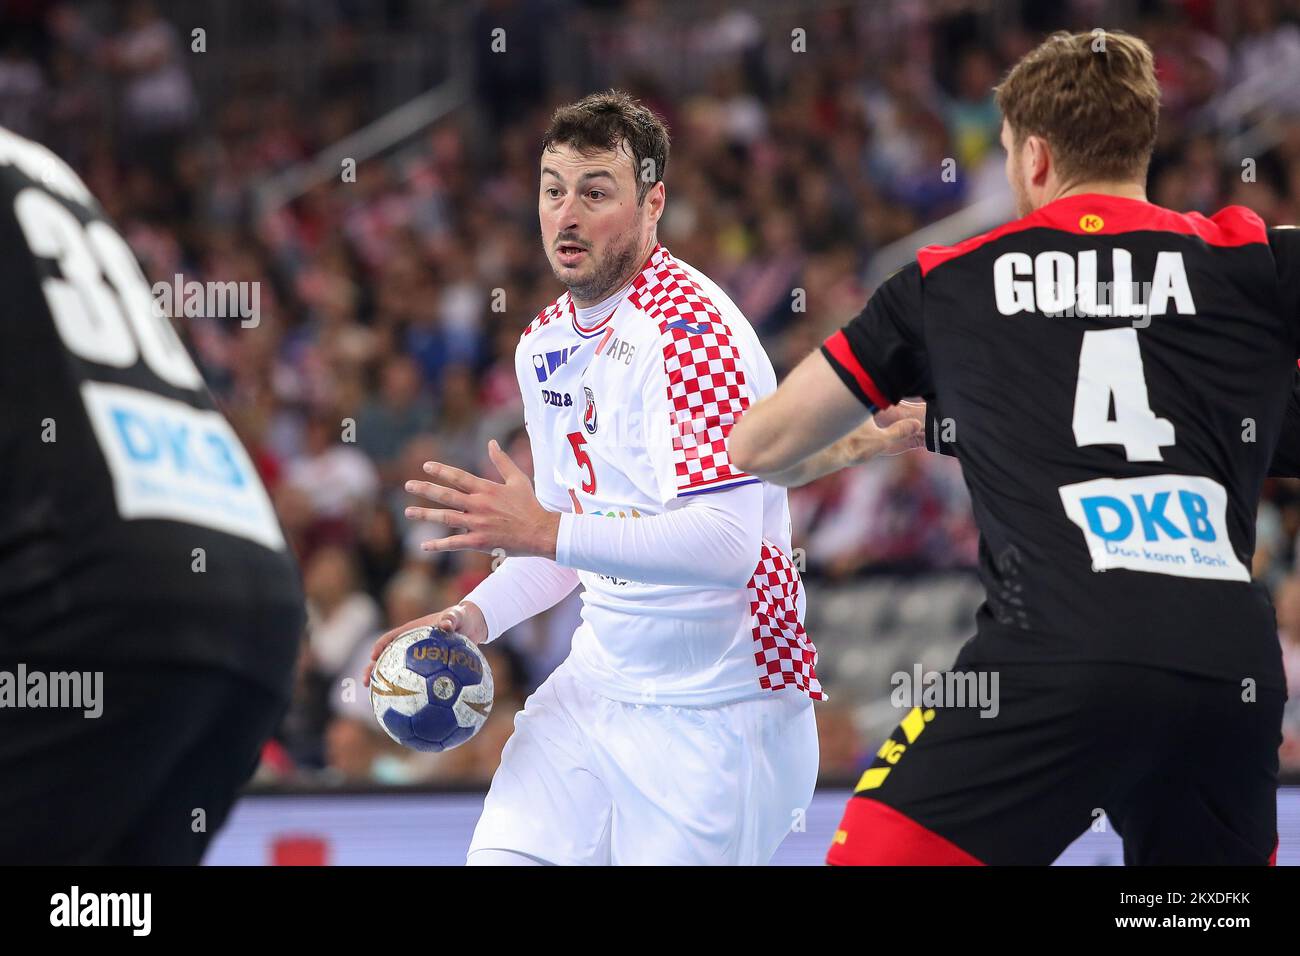 23.10.2019., Croatia, Zagreb - Friendly handball match between Croatia and Germany at the Zagreb Arena. Domagoj Duvnjak, Johannes Golla. Photo: Luka Stanzl/PIXSELL Stock Photo